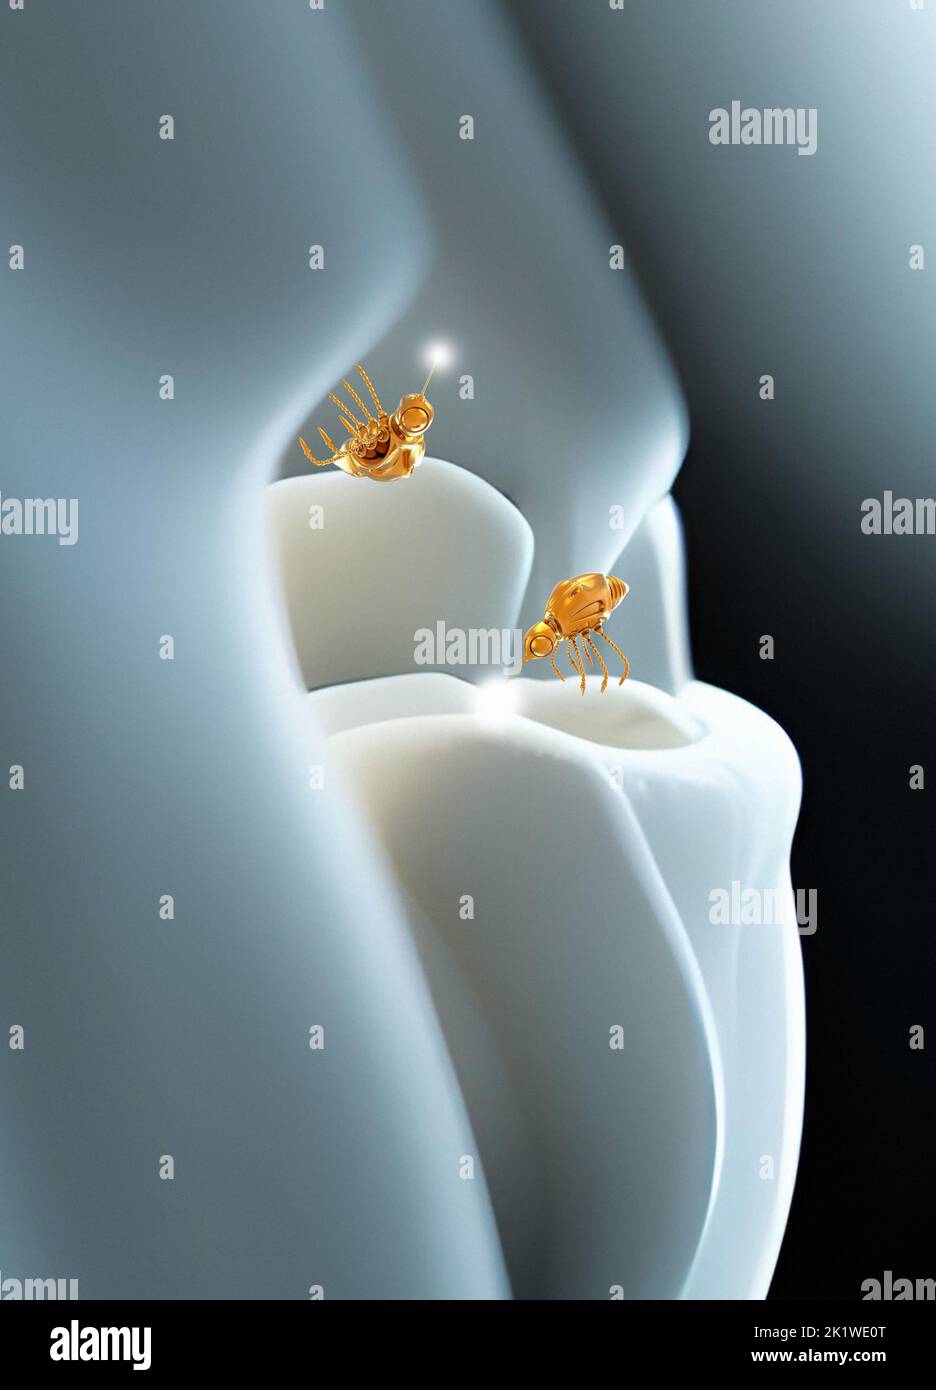 Nanorobots repairing tooth decay and cavities, illustration Stock Photo